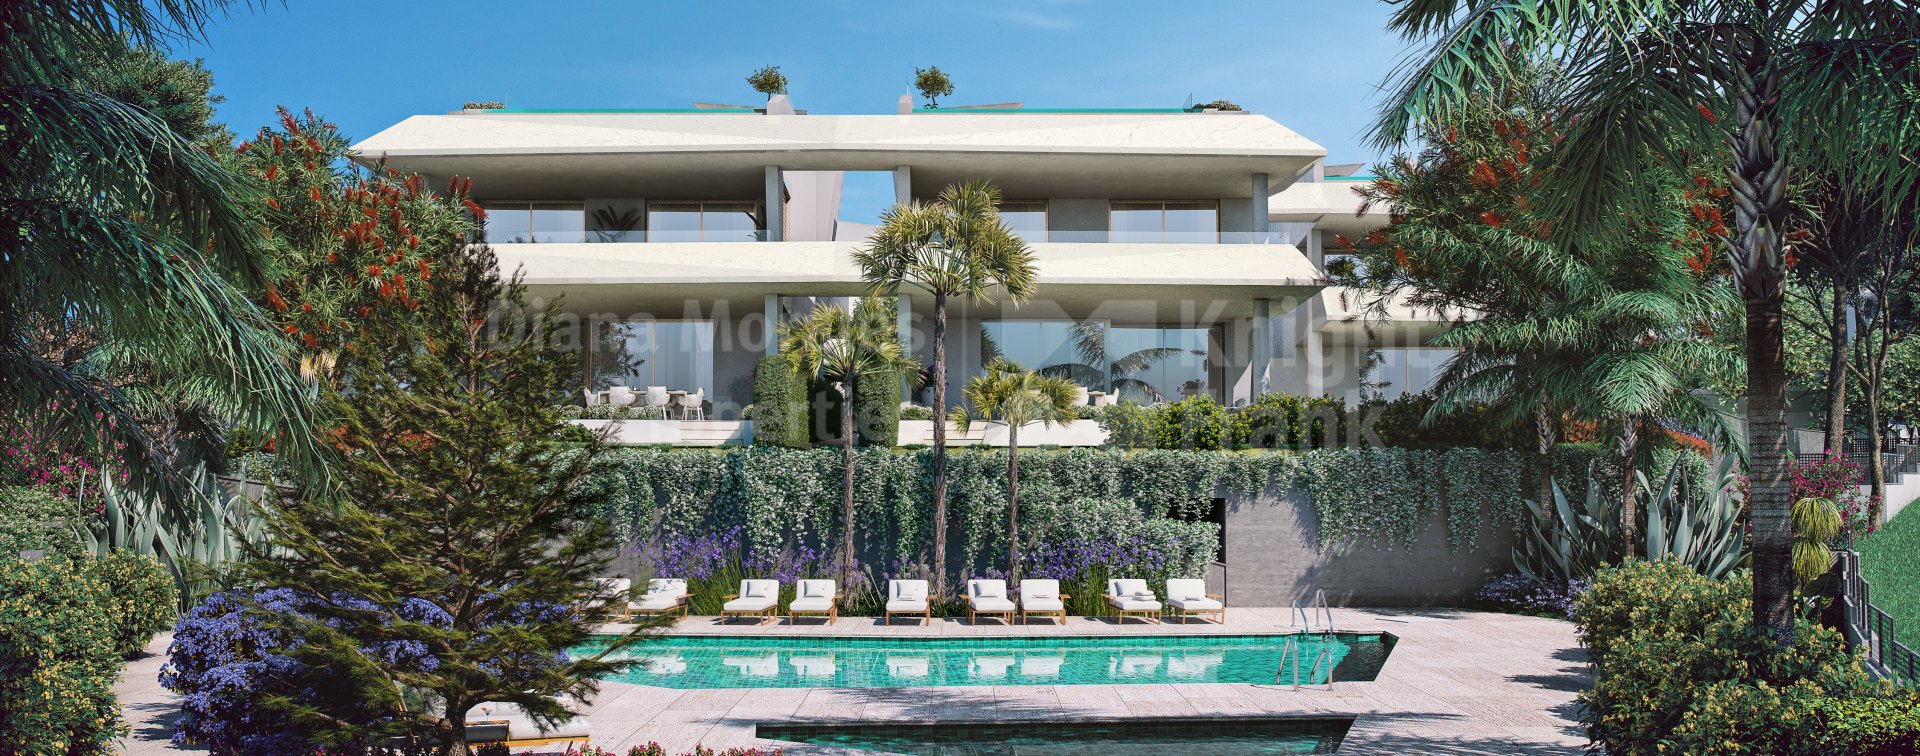 Celeste Marbella, Celeste, residential complex of luxury villas in the heart of Nueva Andalucía